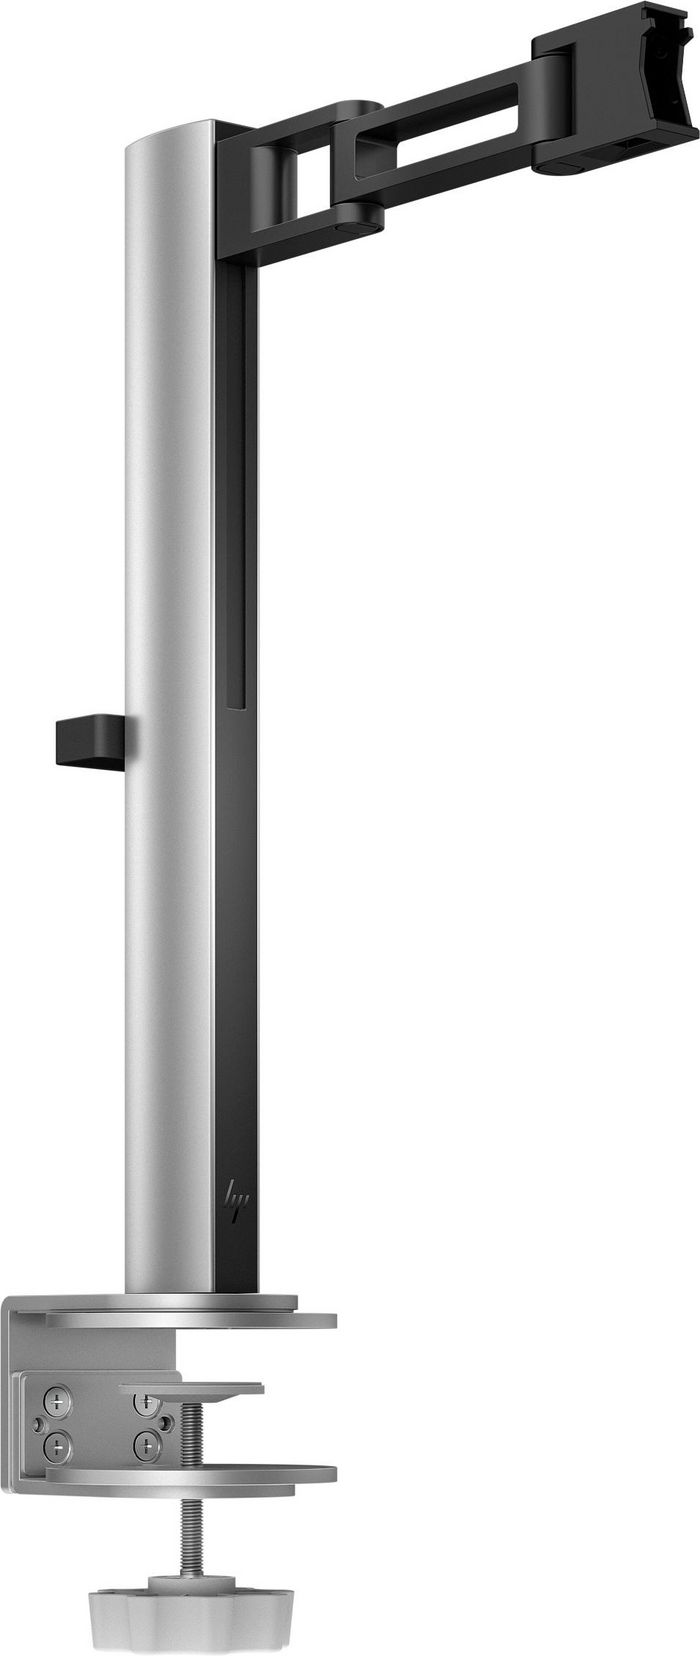 HP Monitor Mount / Stand 80 Cm (31.5") Black, Silver Desk - W128346652